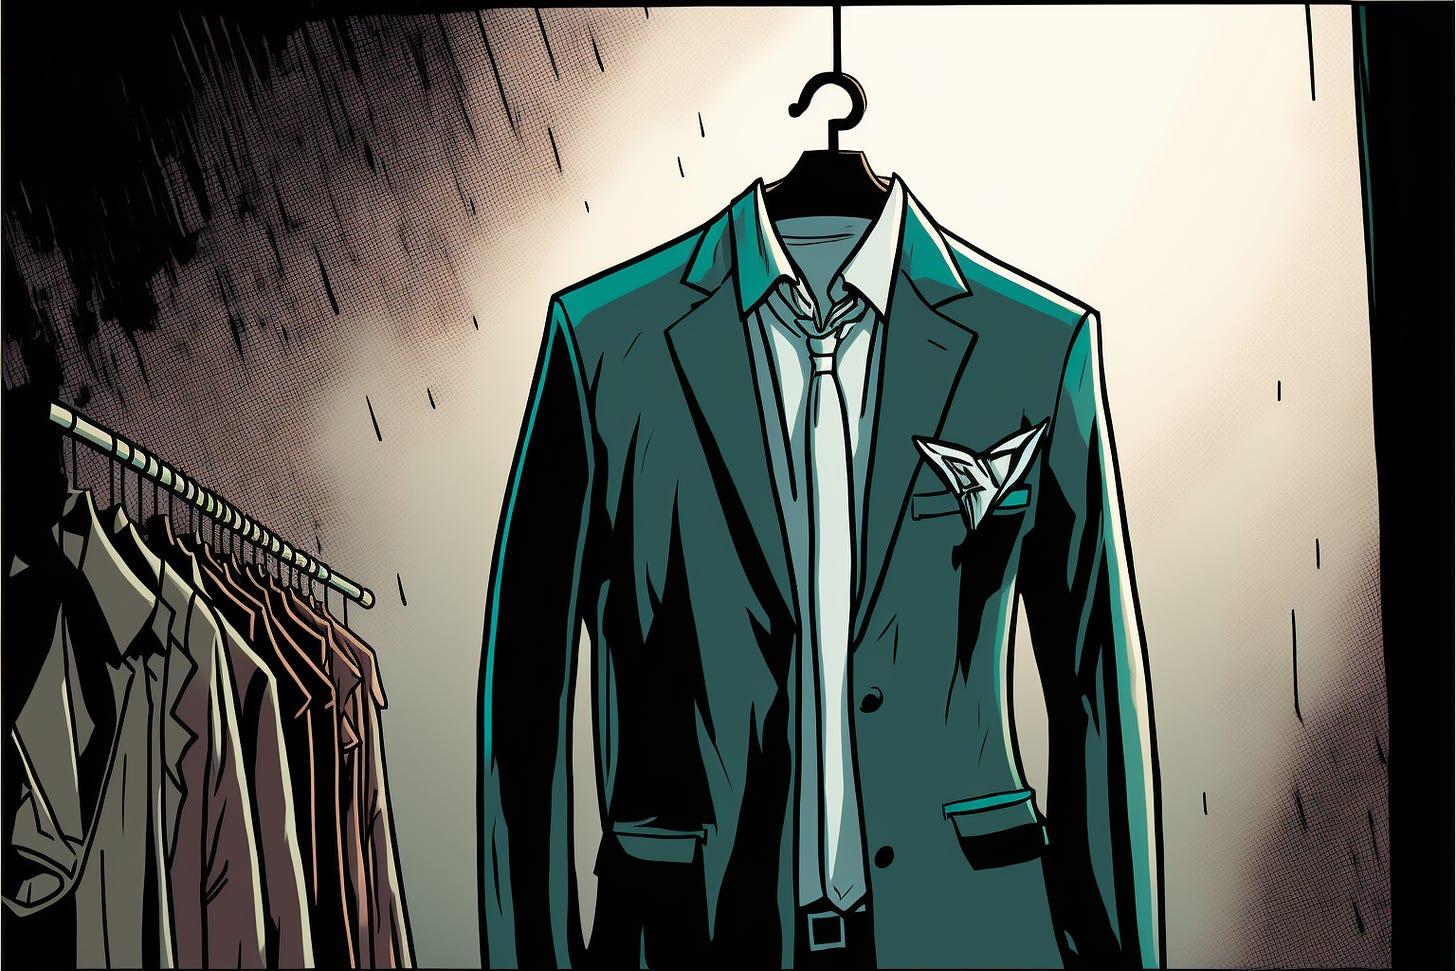 a suit jacket on a hanger, graphic novel